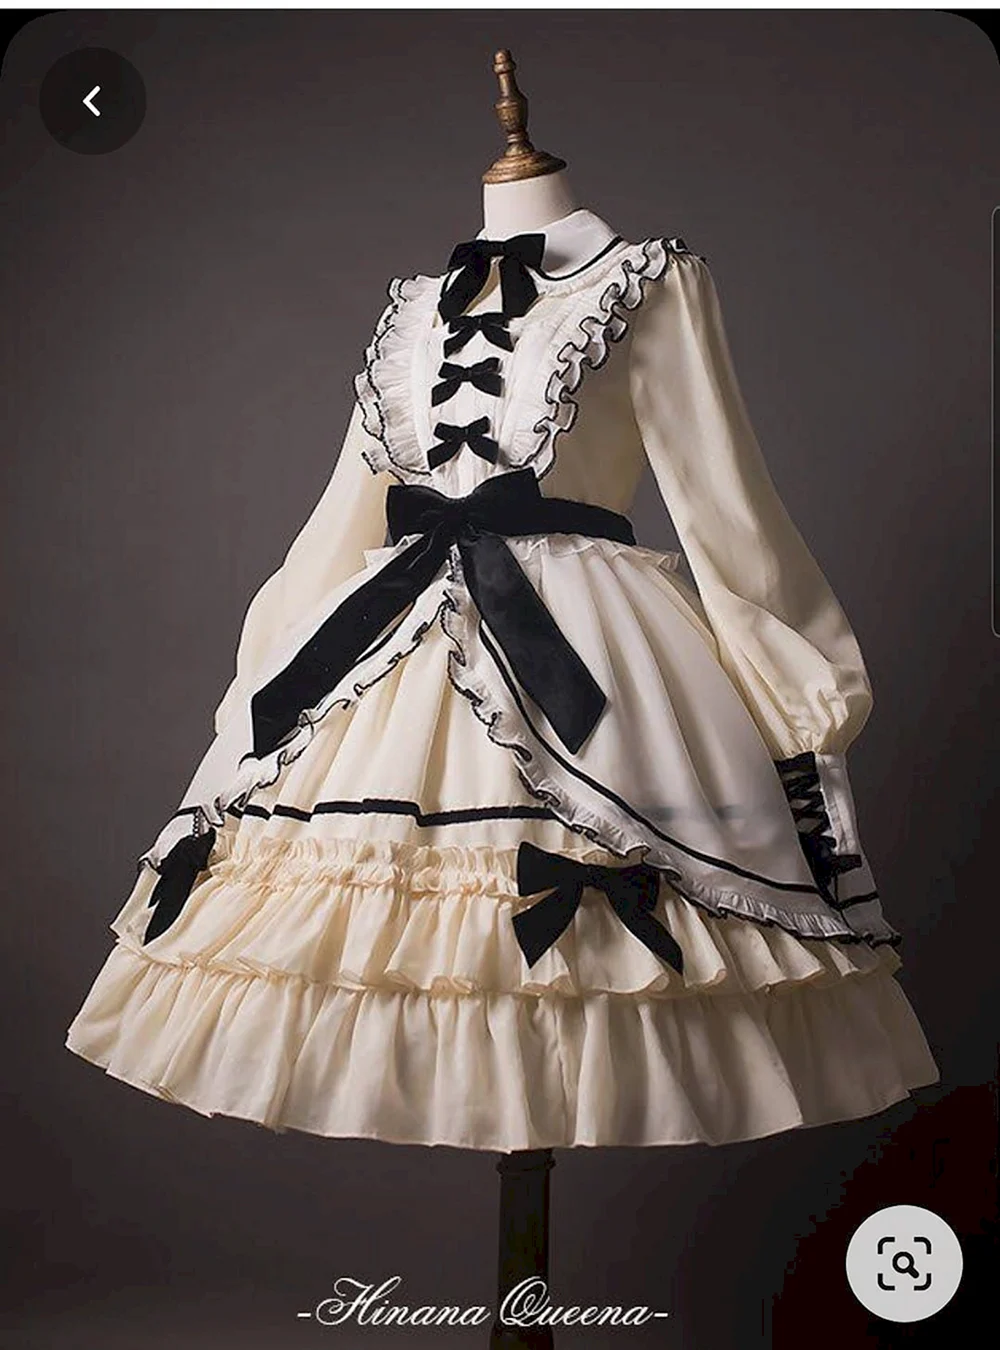 Референс женская одежда 19 века Готика